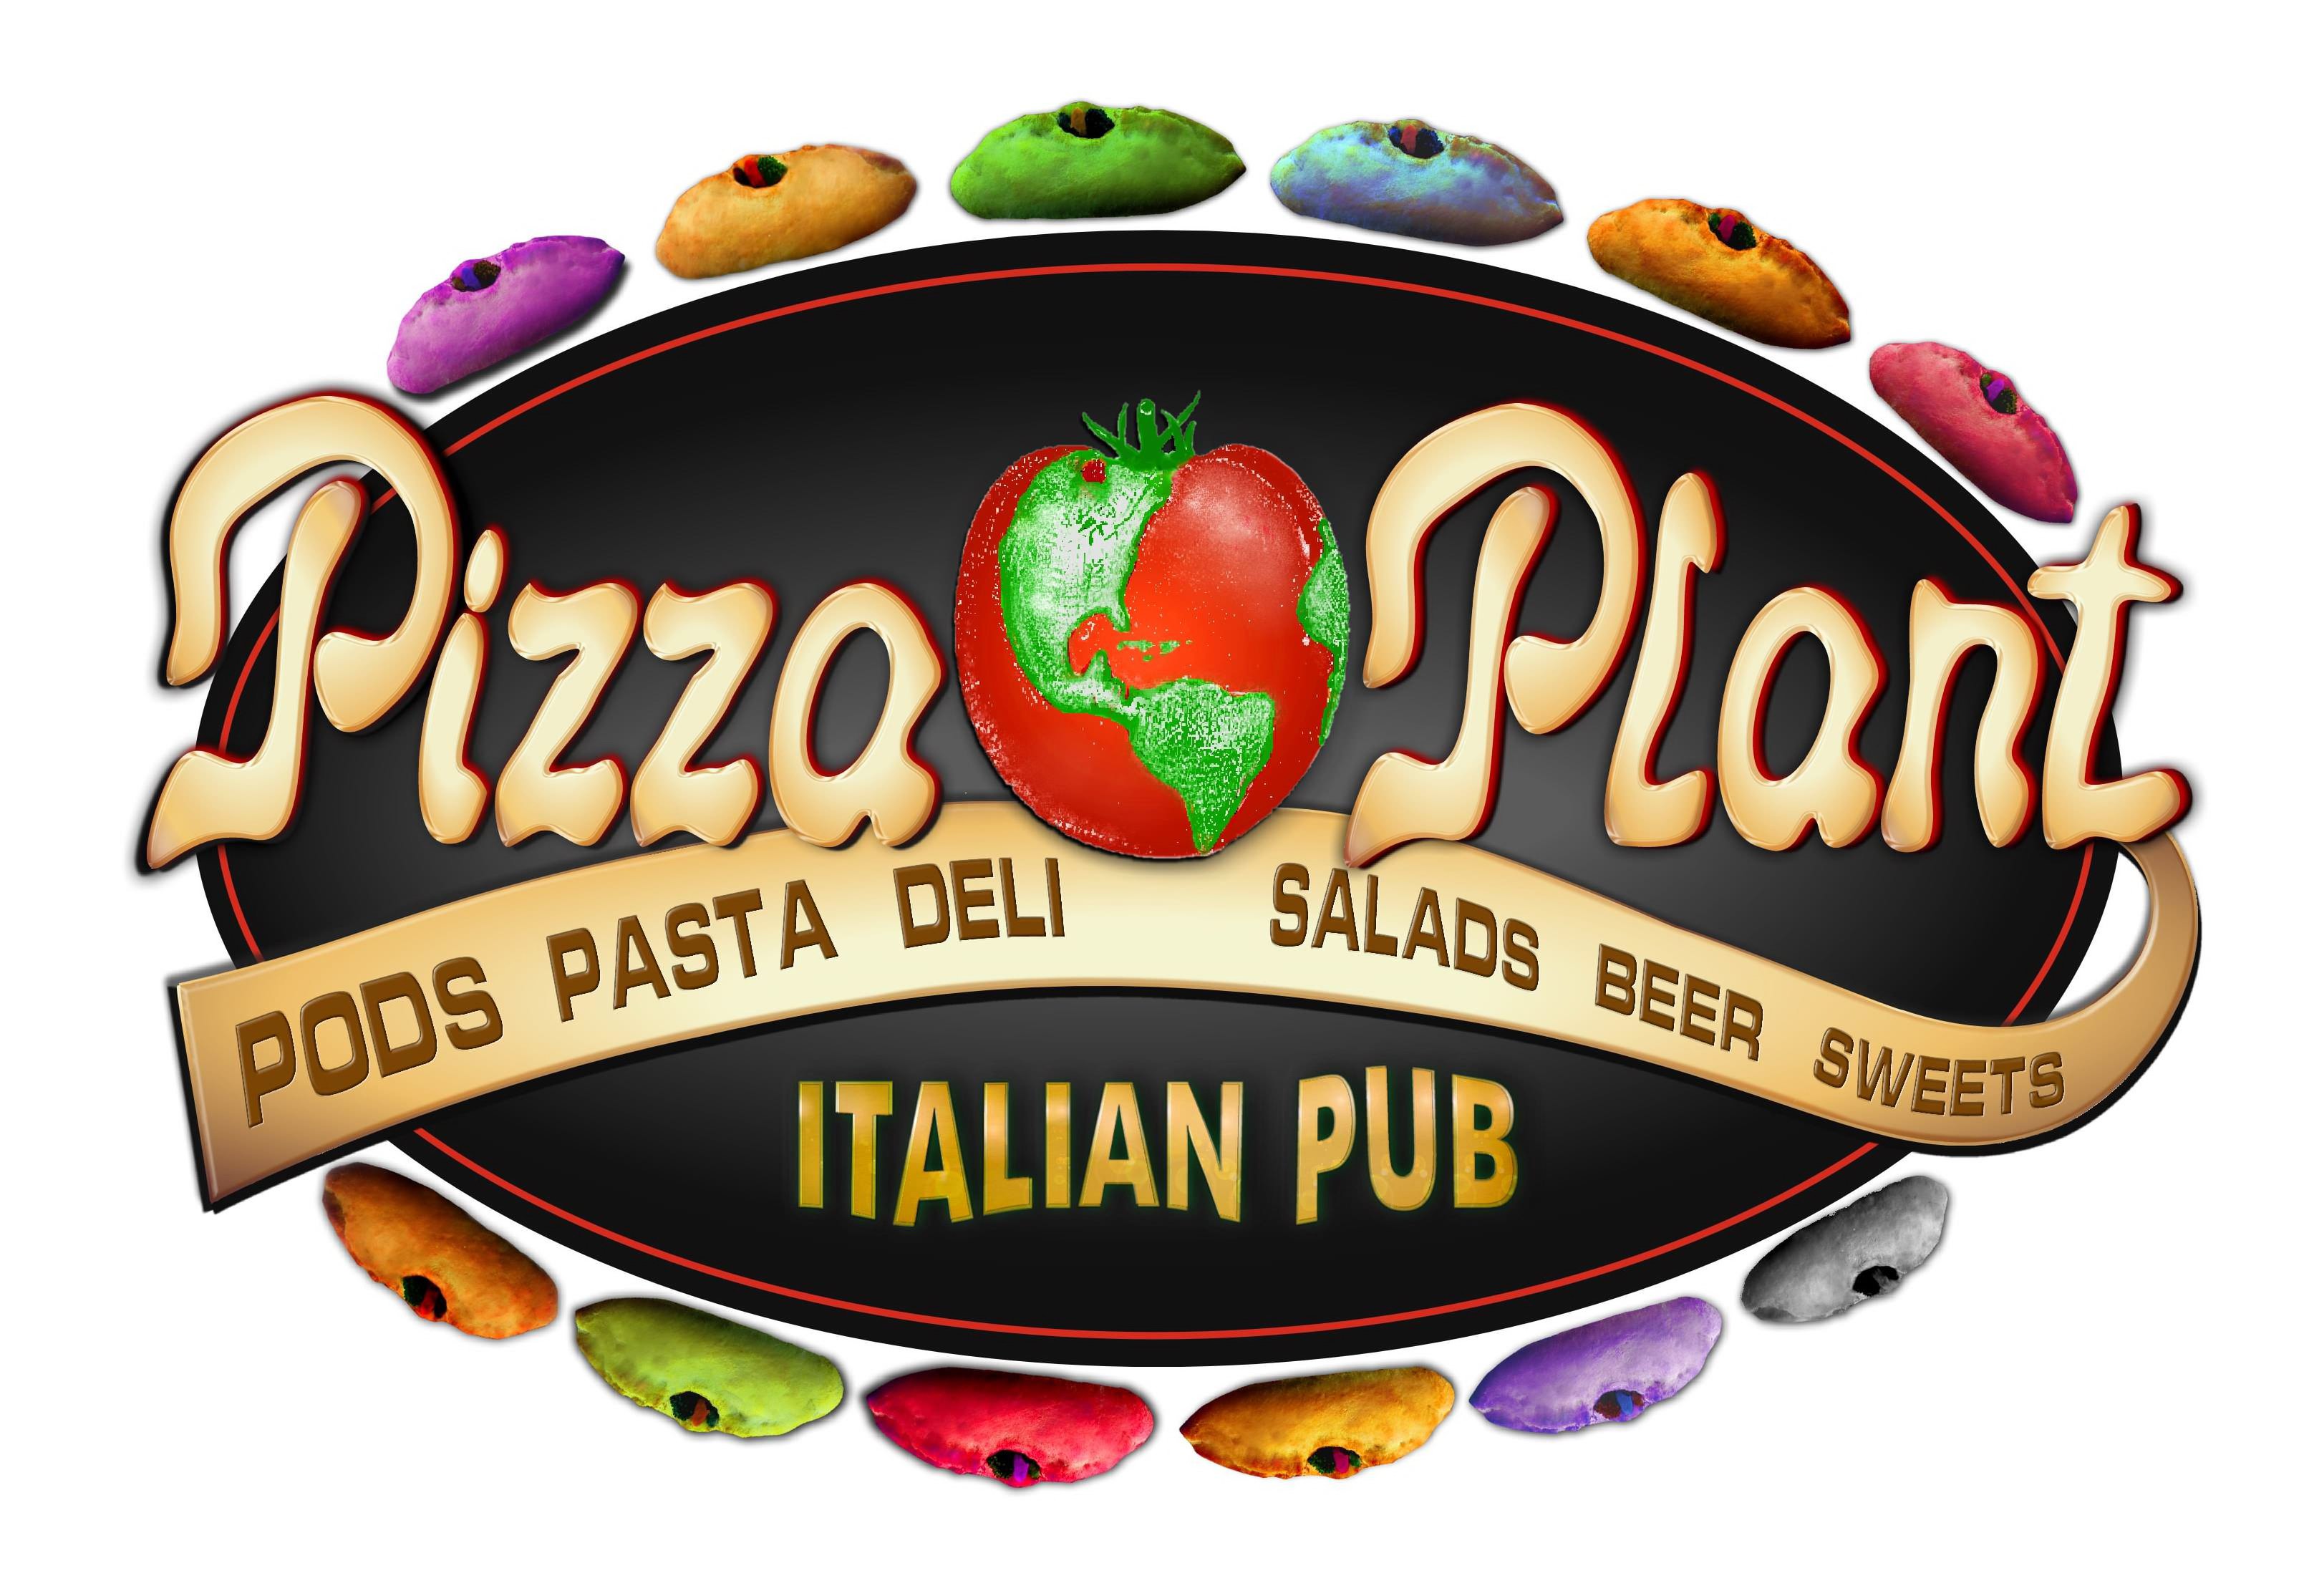  PIZZA PLANT ITALIAN PUB PODS PASTA DELI SALADS BEER SWEETS